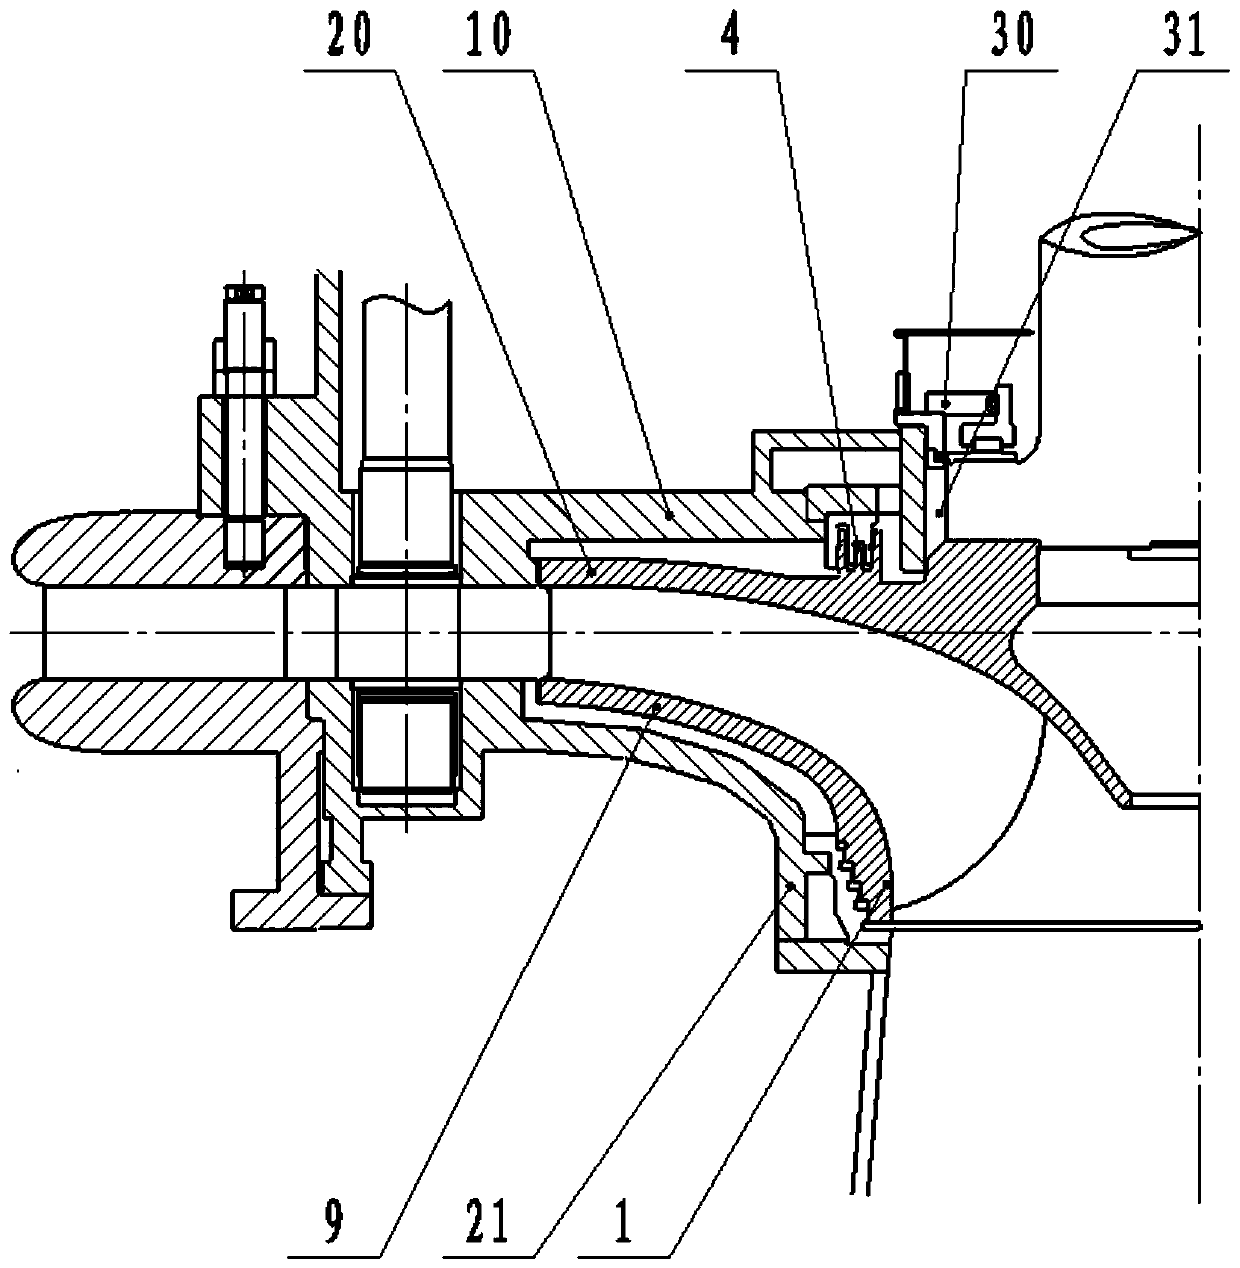 High water head water pump turbine rotating wheel double sealing pressure decreasing structure